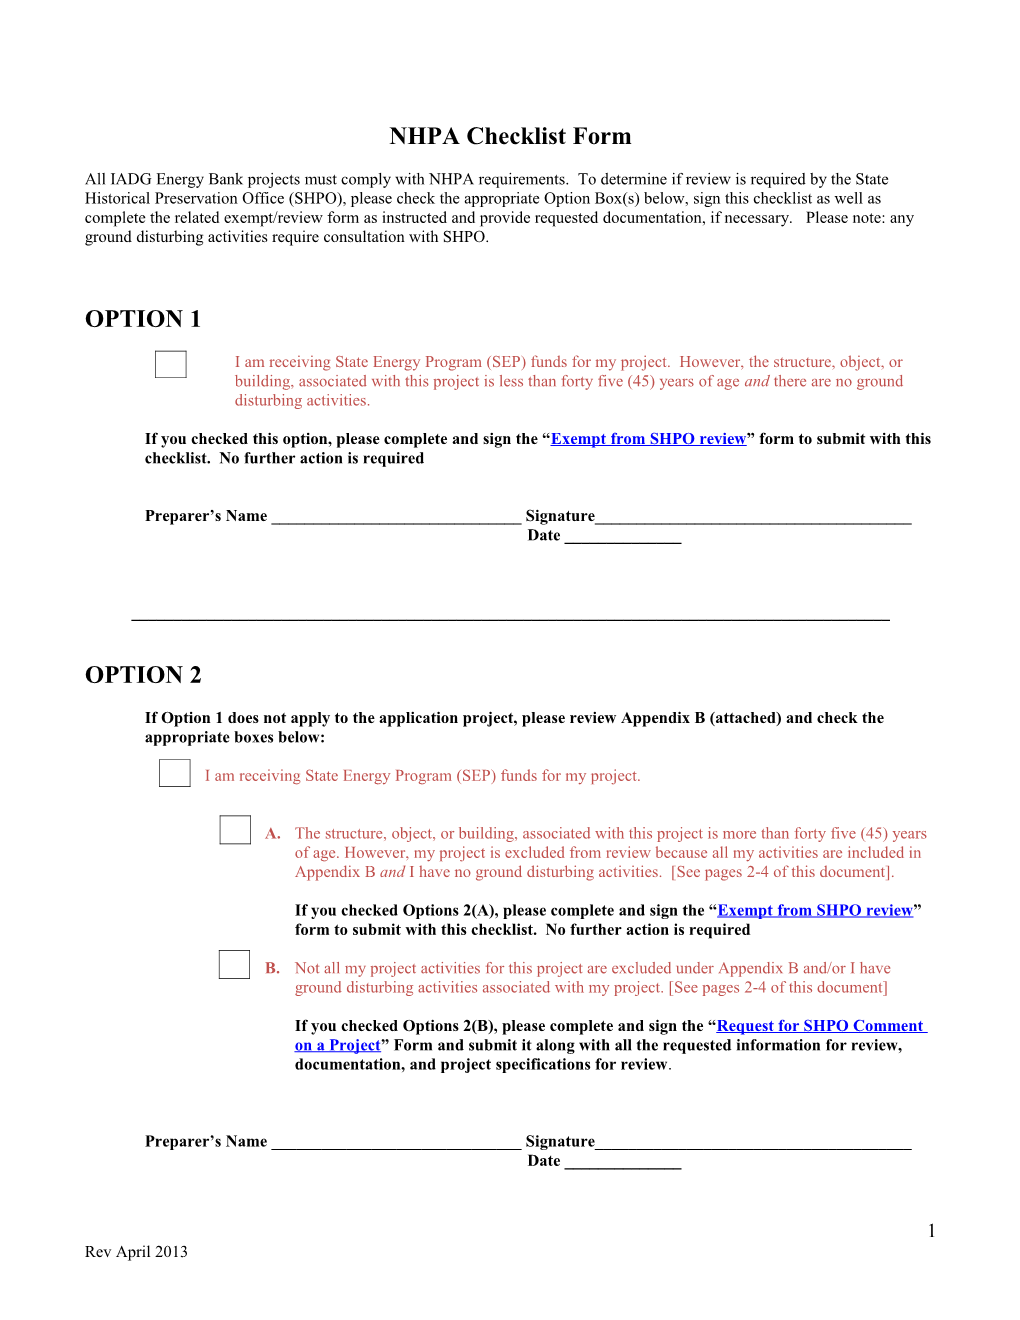 NHPA Checklist Form